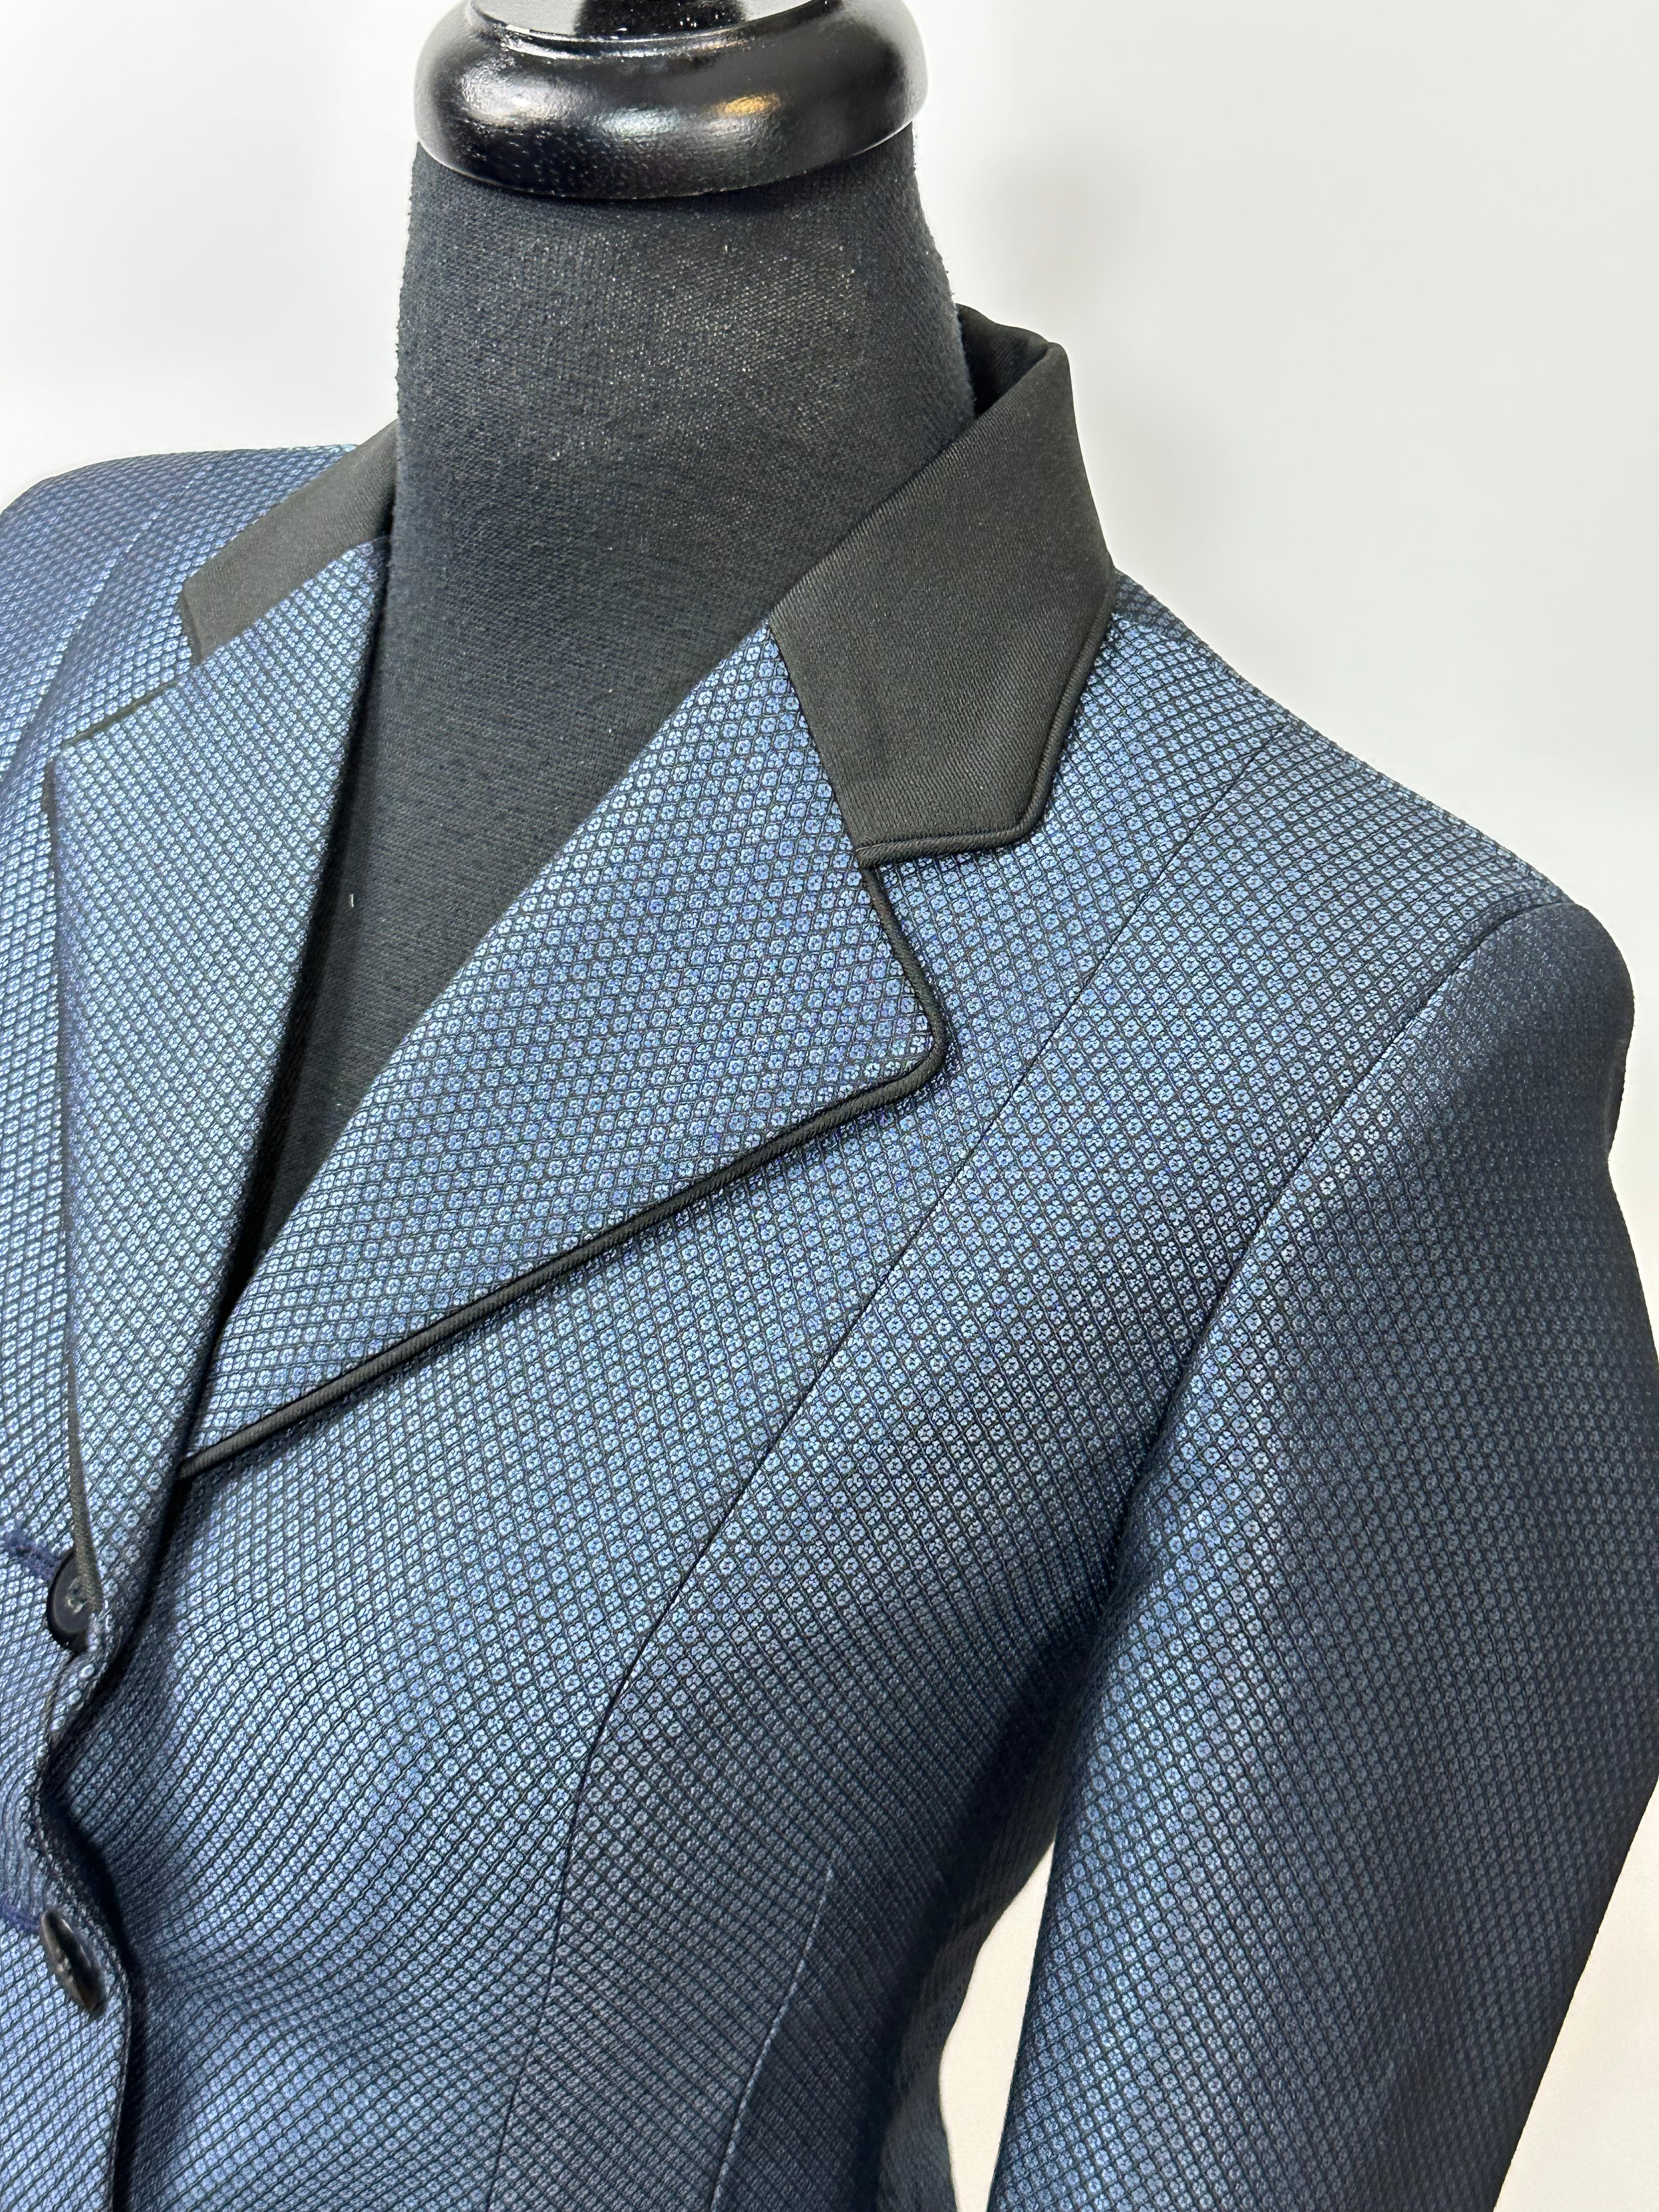 English Show Coat Blue Grey Fabric Code R305